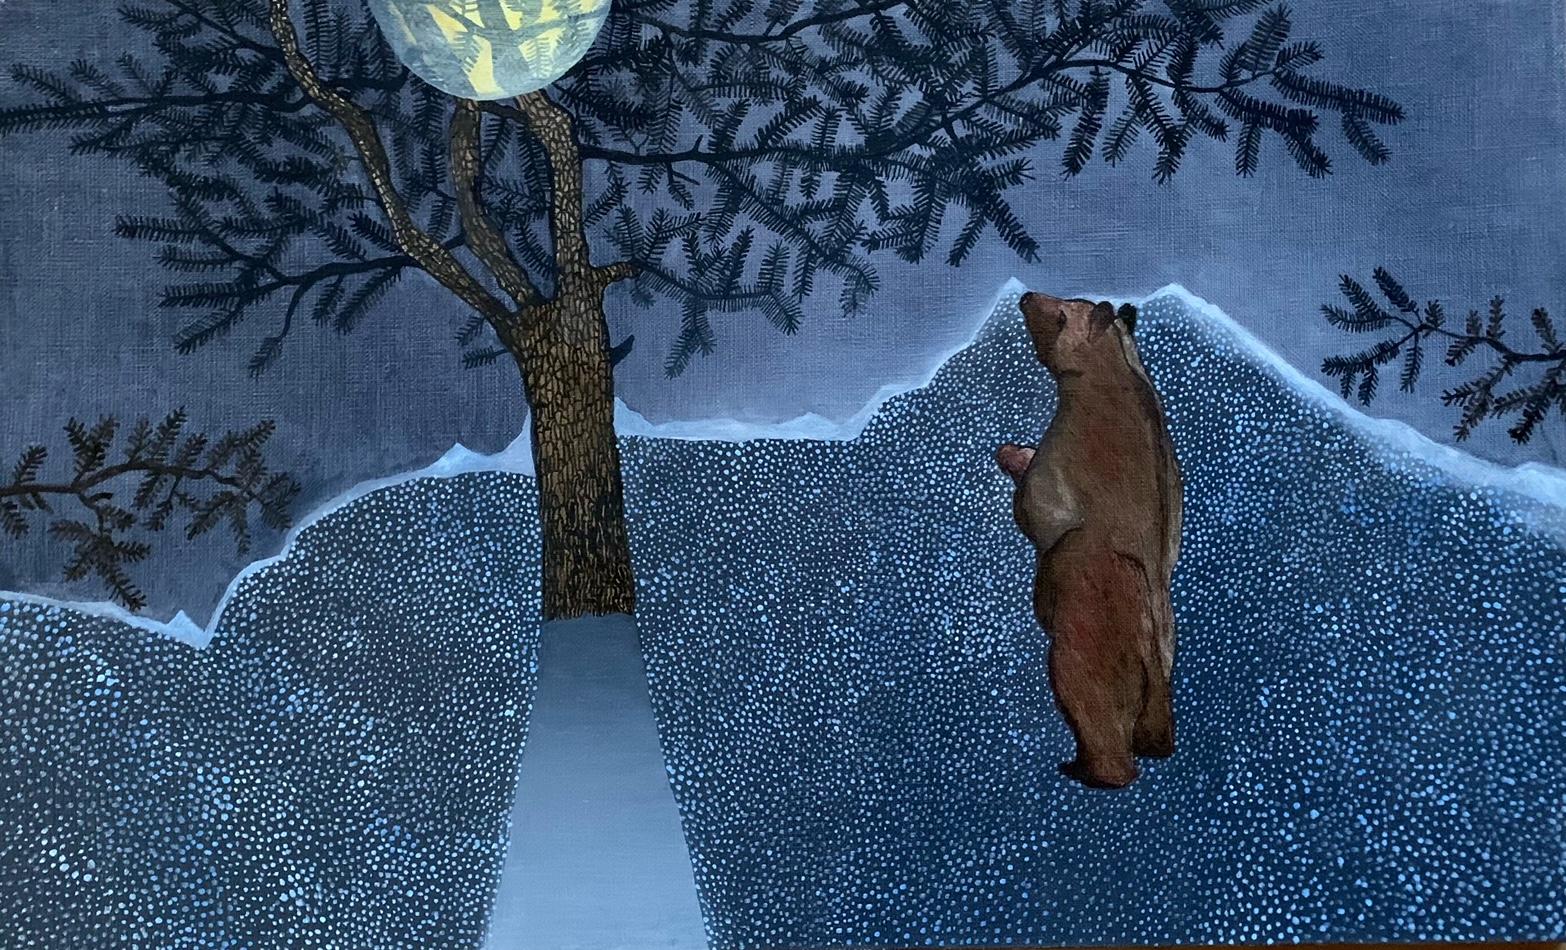 Aleksandra Bujnowska Landscape Painting - Amuse Bouche - Contemporary Figurative Nature Animal Oil Painting, Bear, Trees